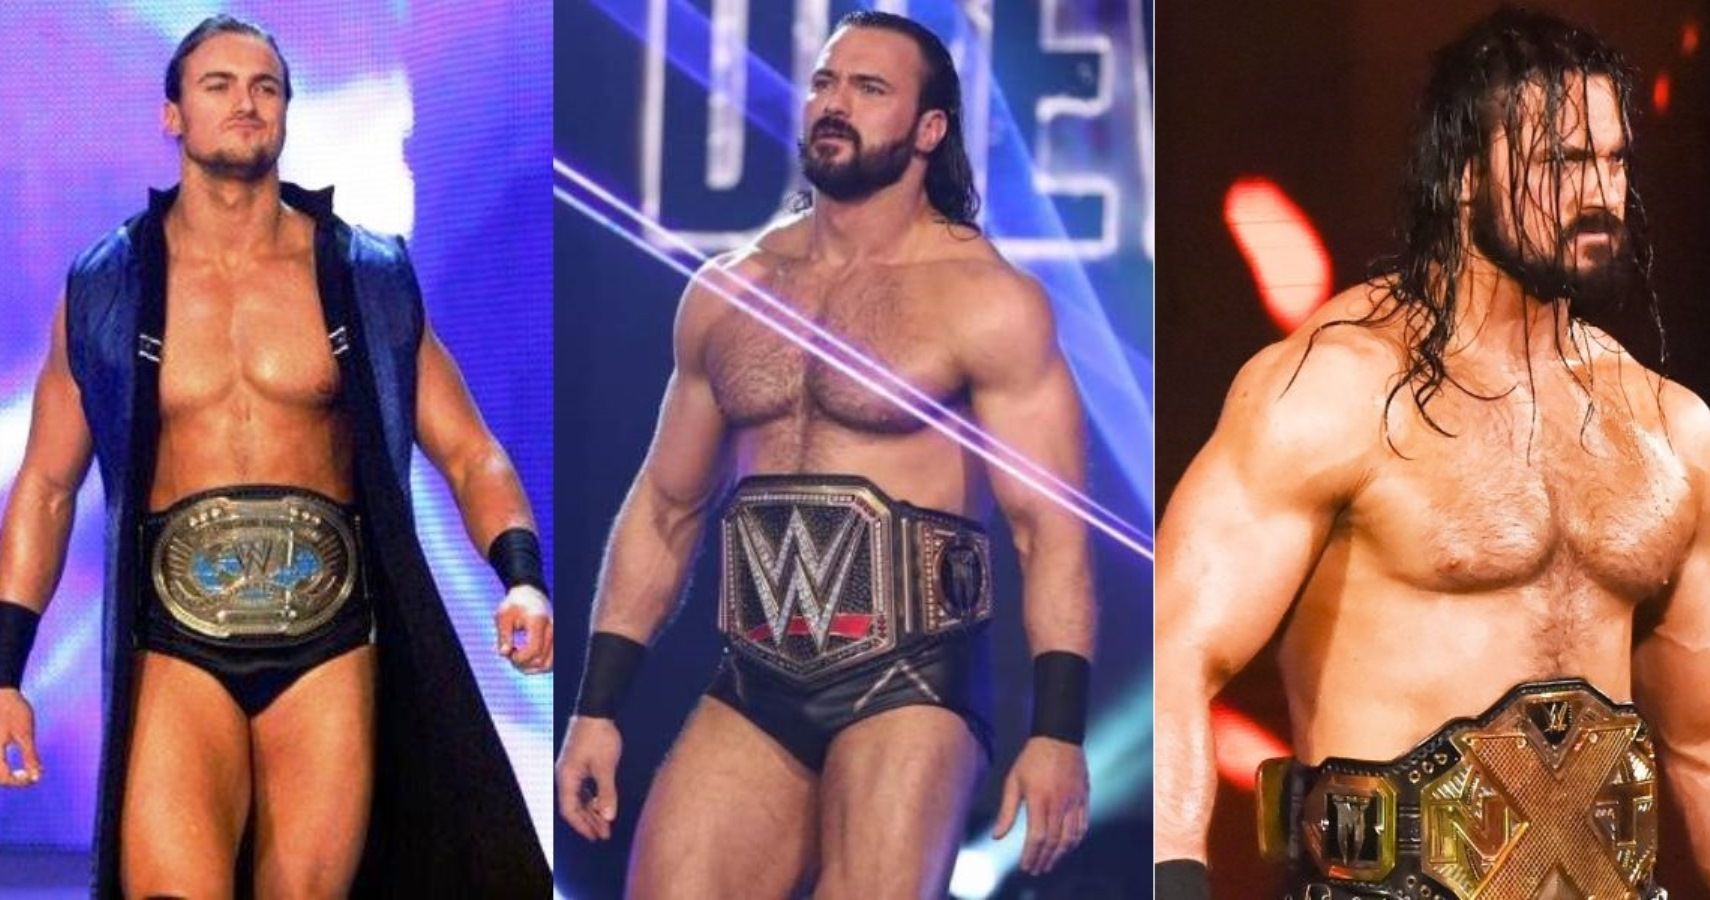 Drew McIntyre As Champion On All Three WWE Brands